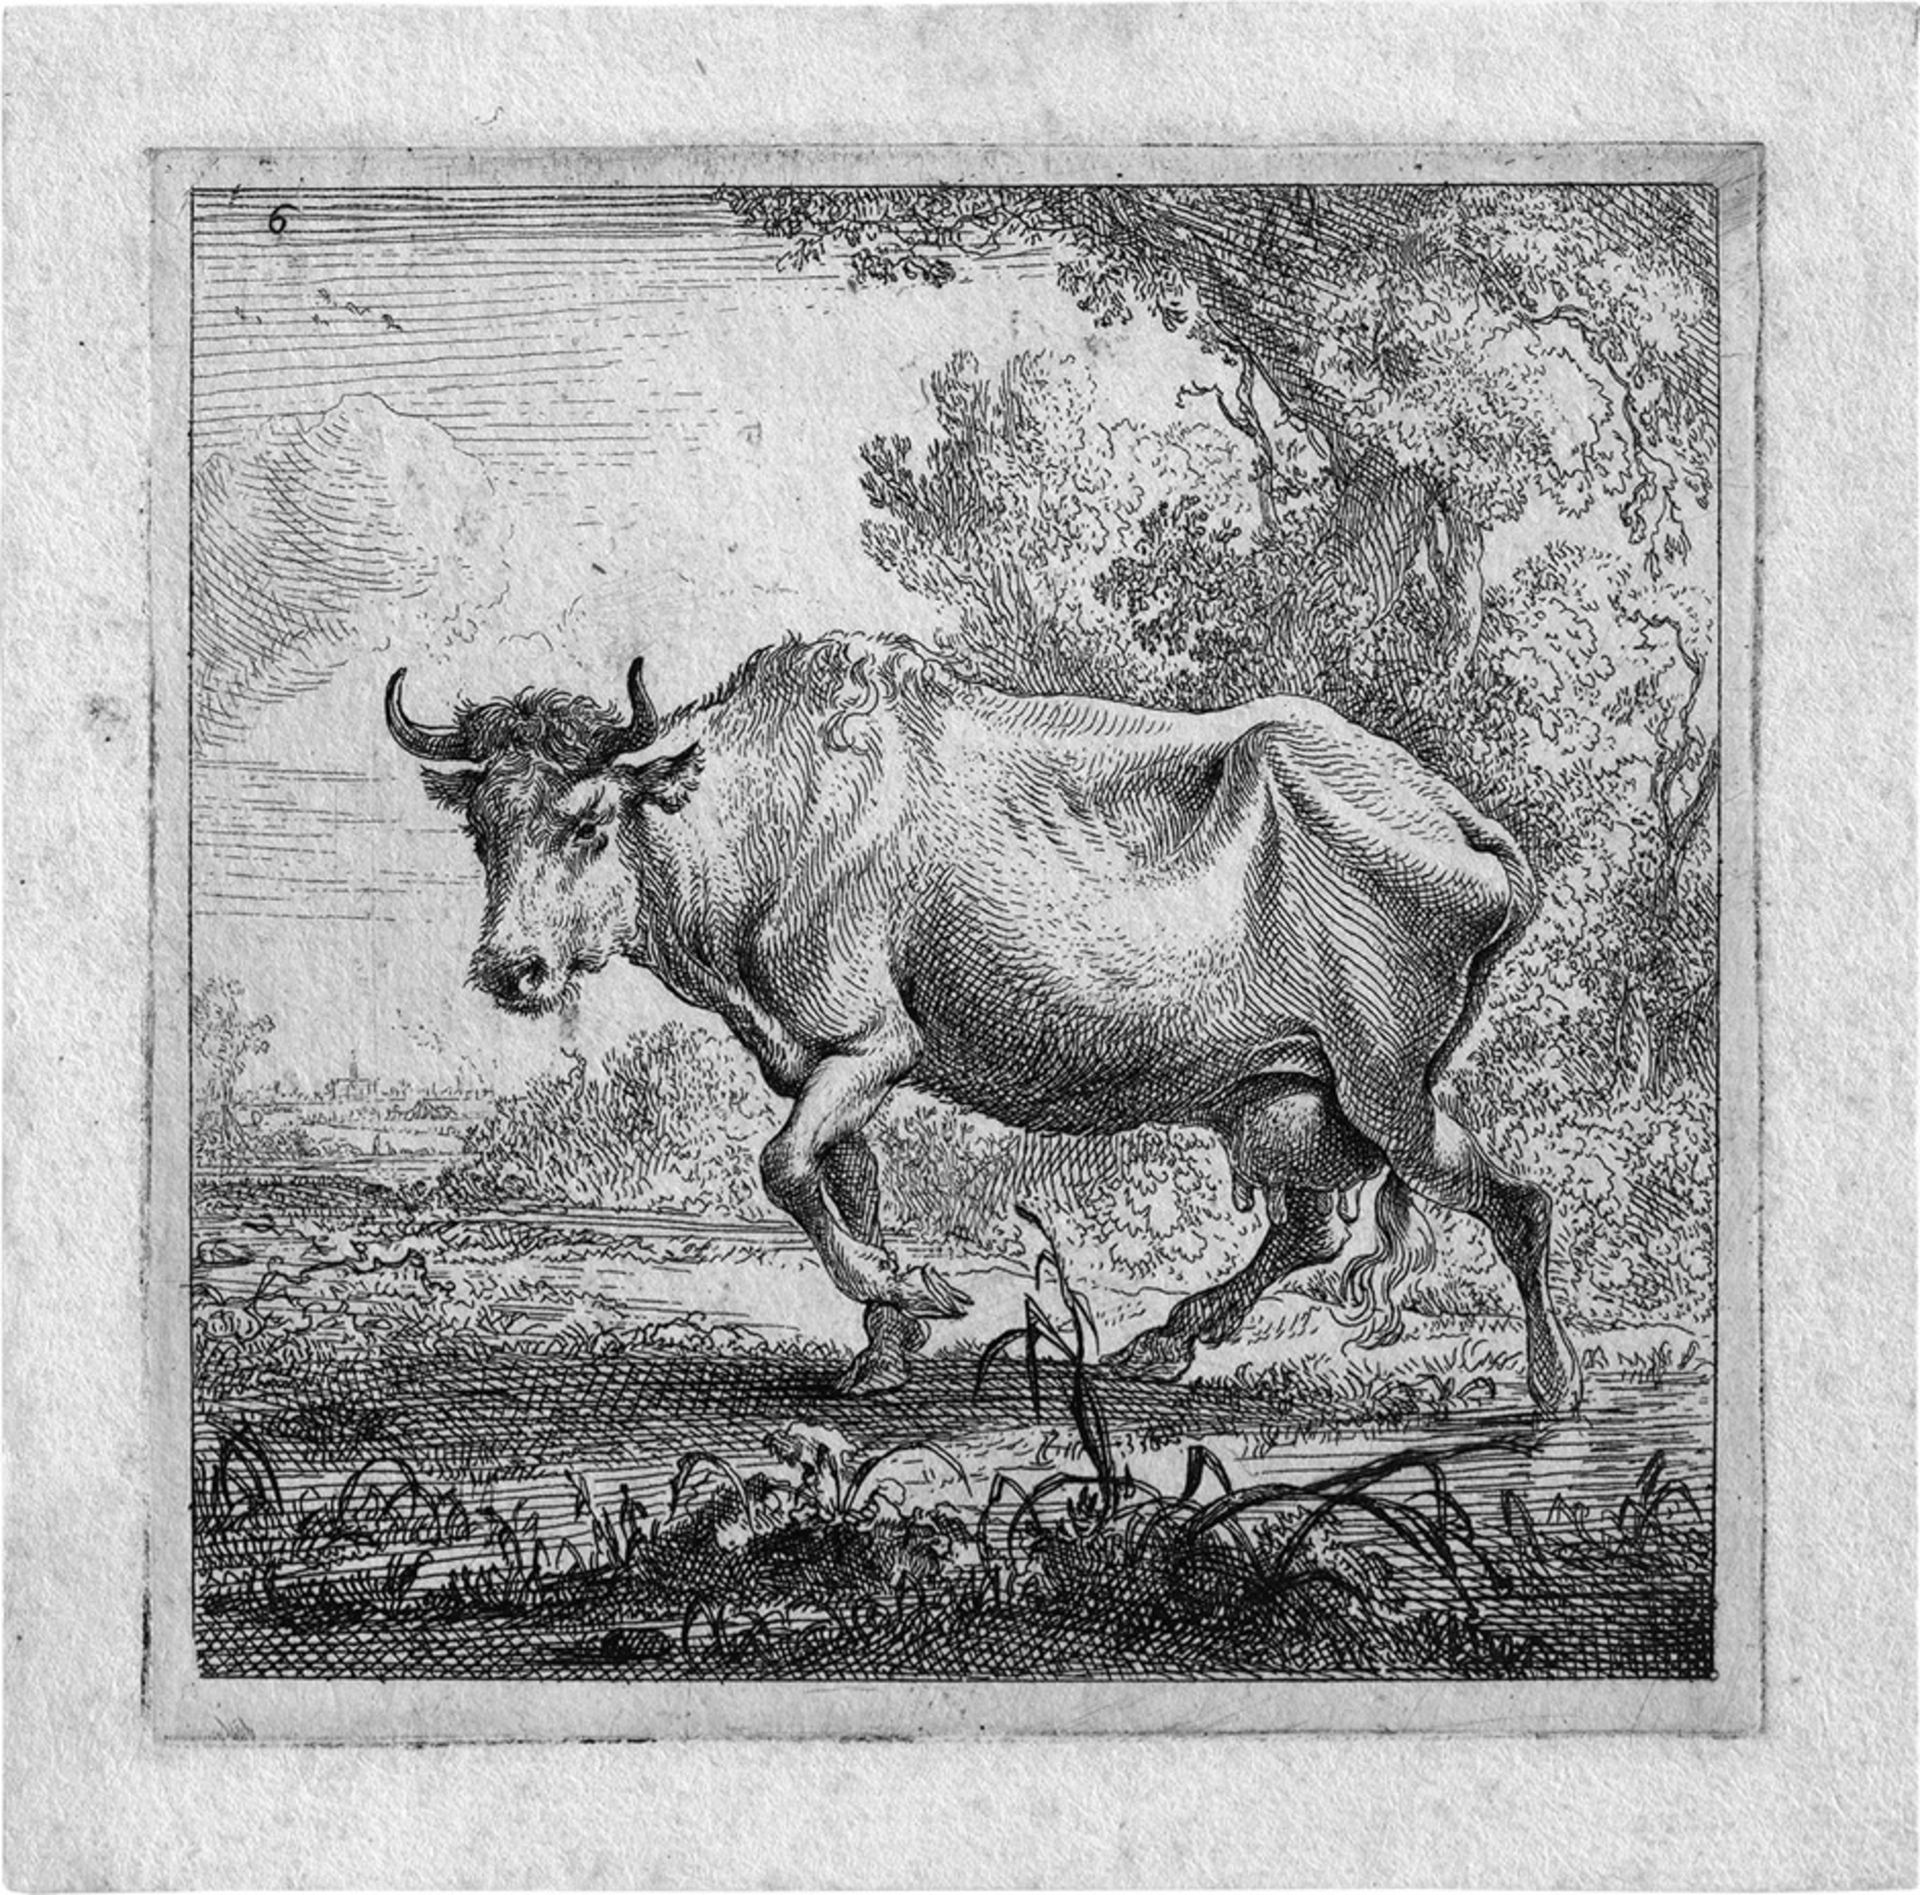 Berchem, Nicolaes: Die Folge der Kühe, mit dem Milchmädchen Die Folge der Kühe, mit dem